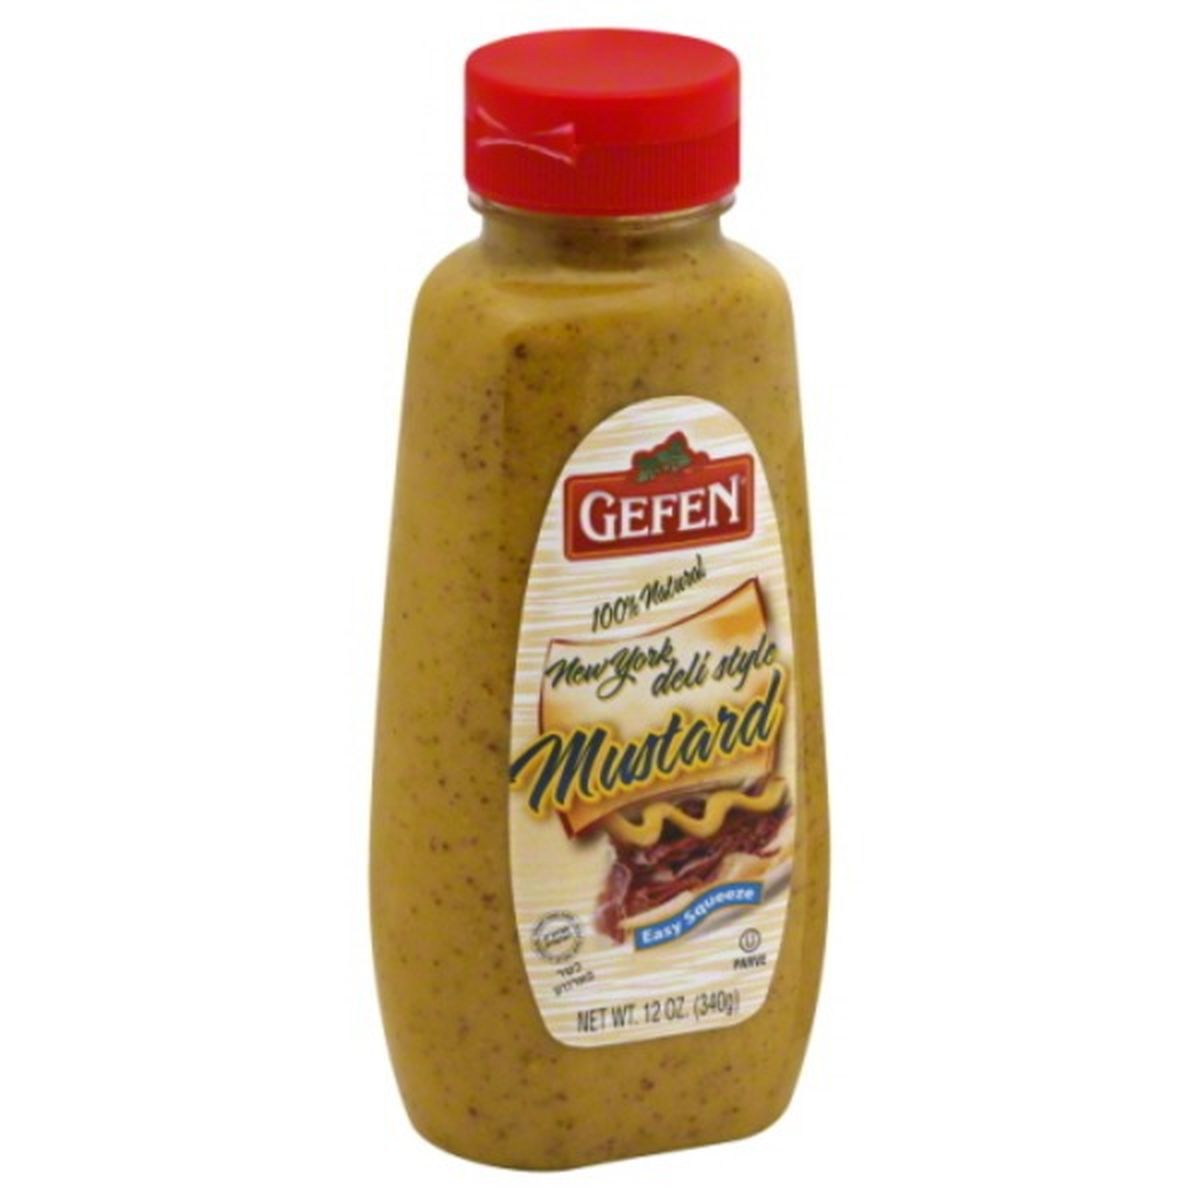 Calories in Gefen Mustard, New York Deli Style